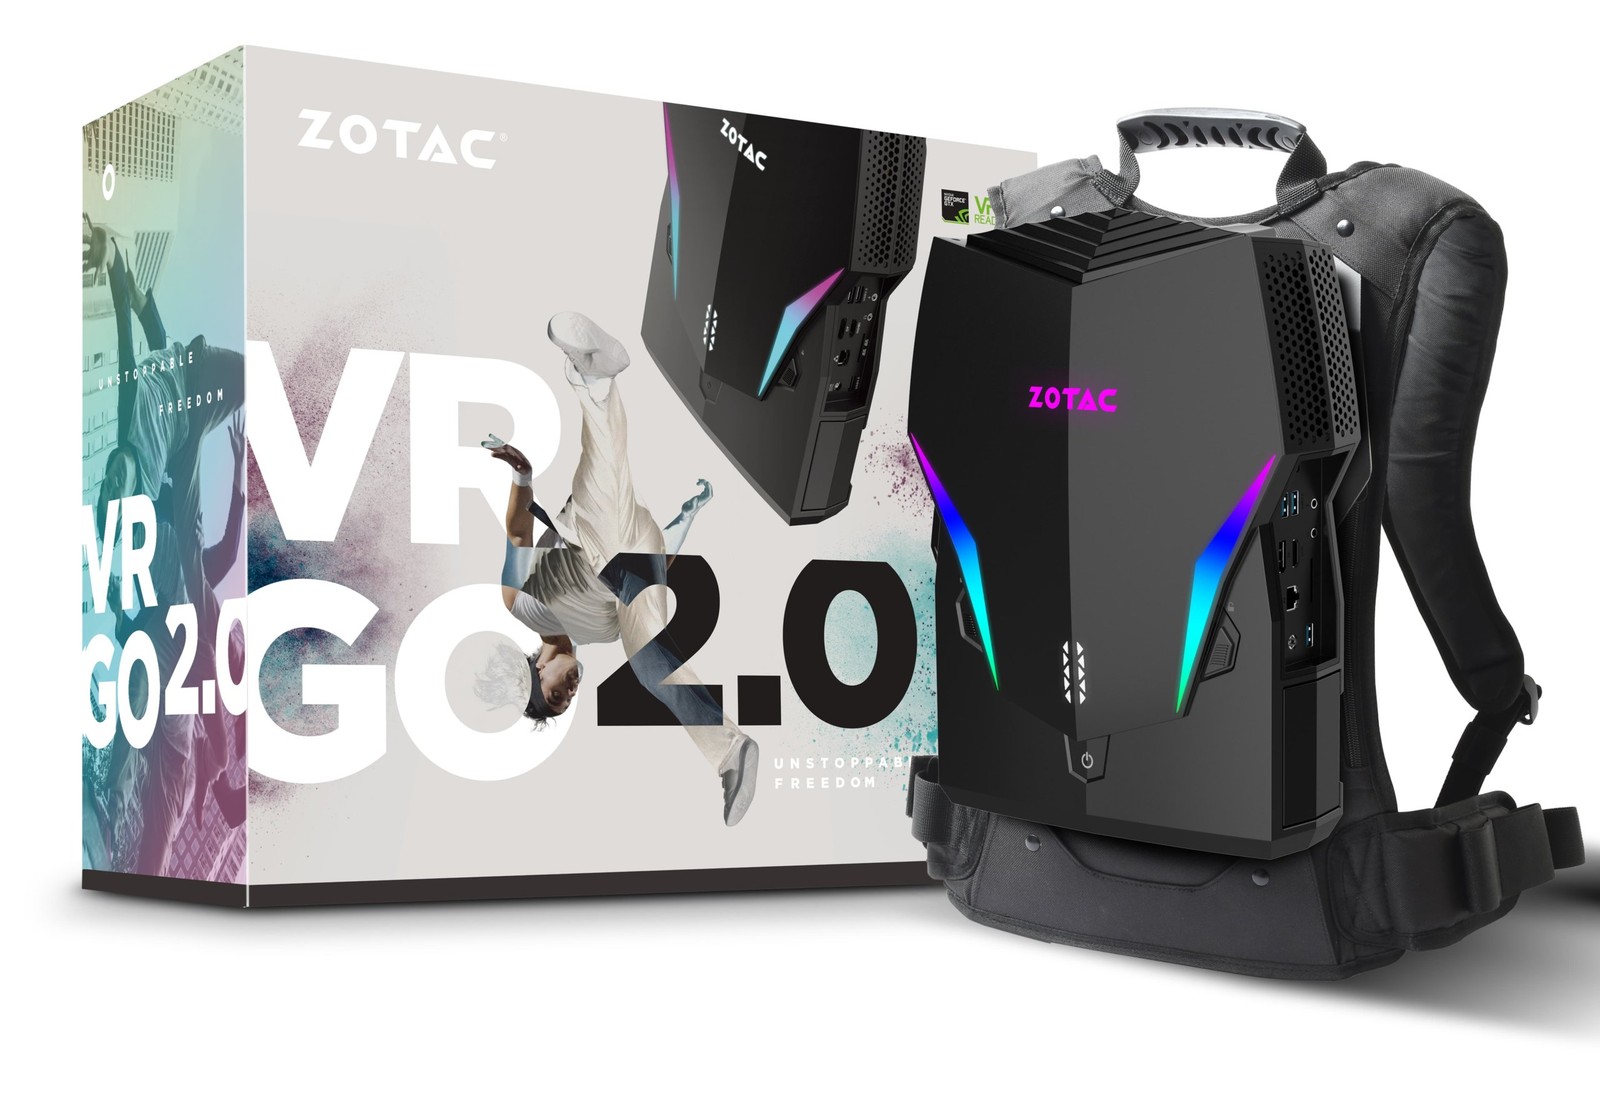 Zotac VR GO 2.0